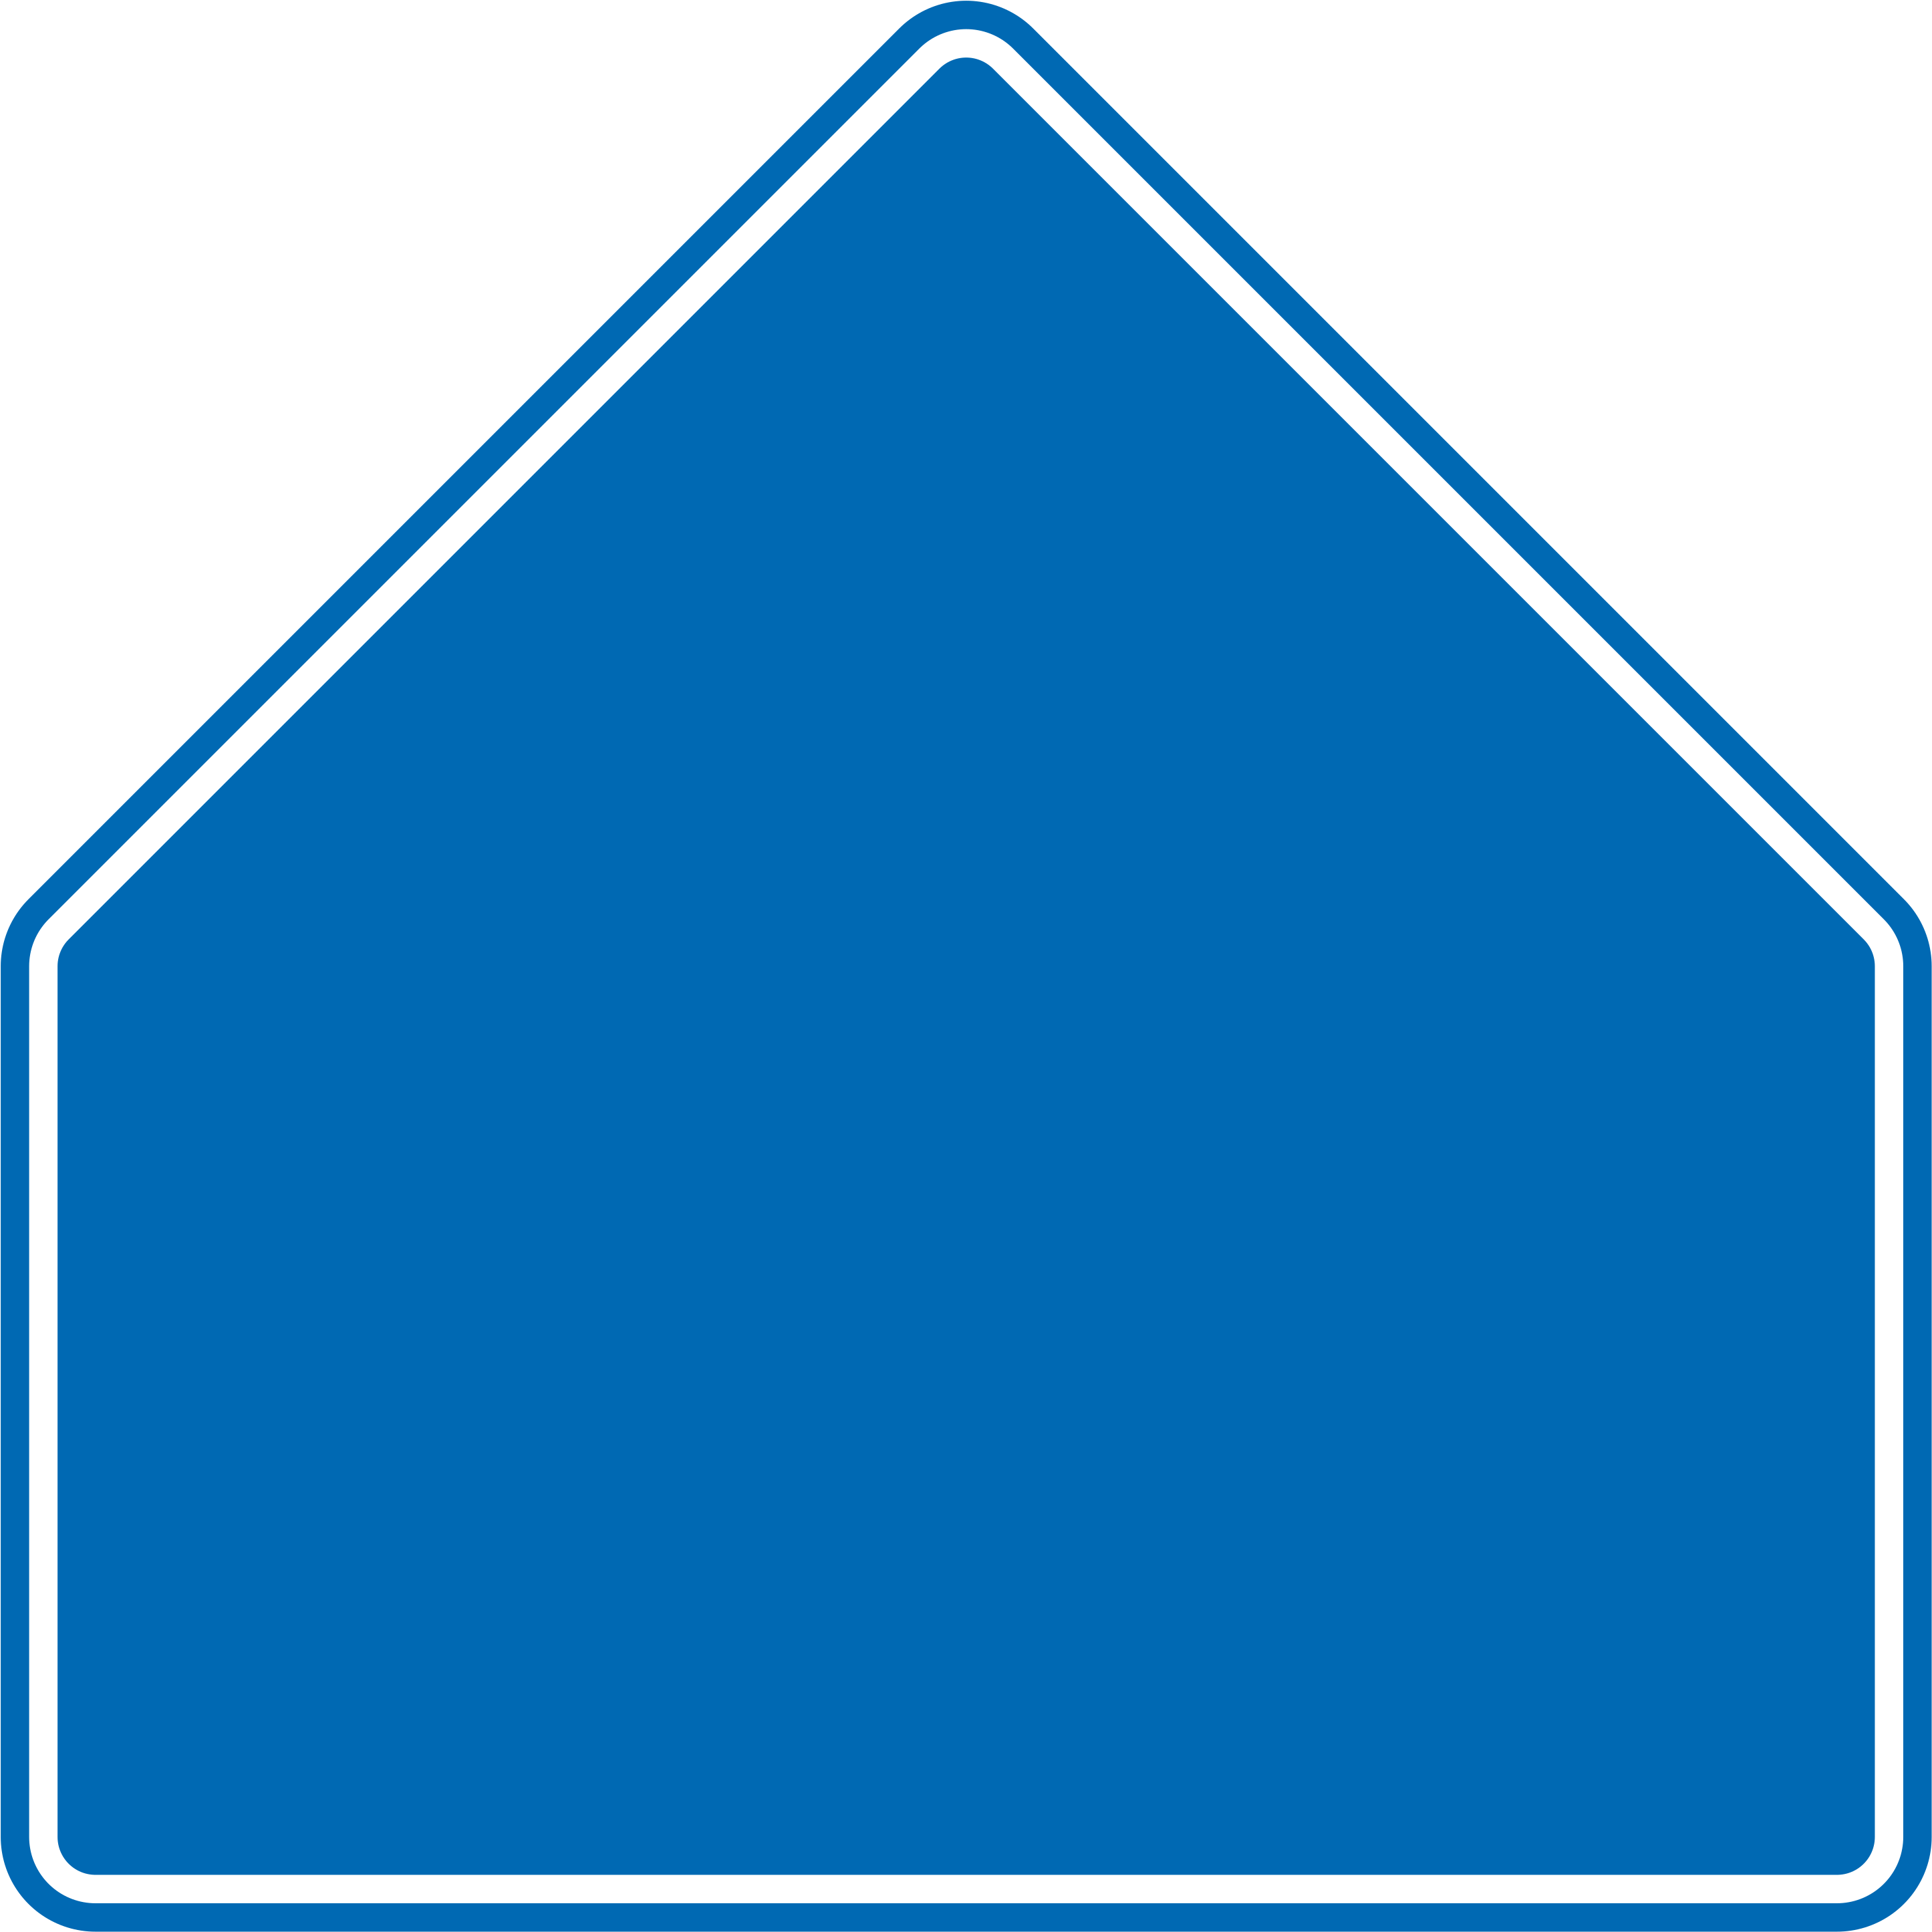 Blue Pentagon Shape Icon PNG image